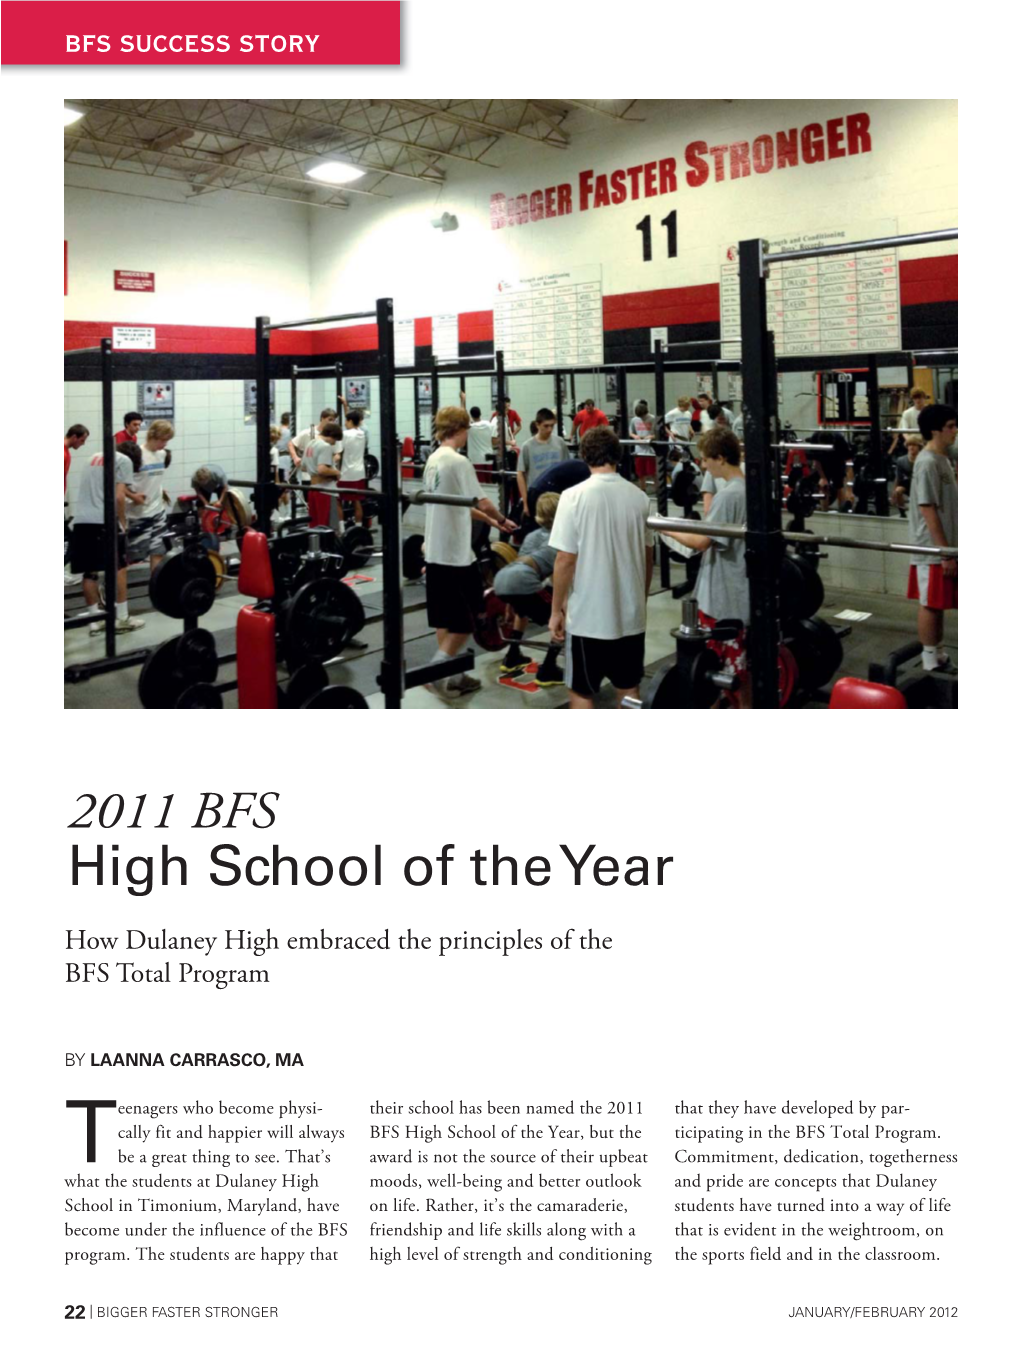 2011 BFS High School of the Year